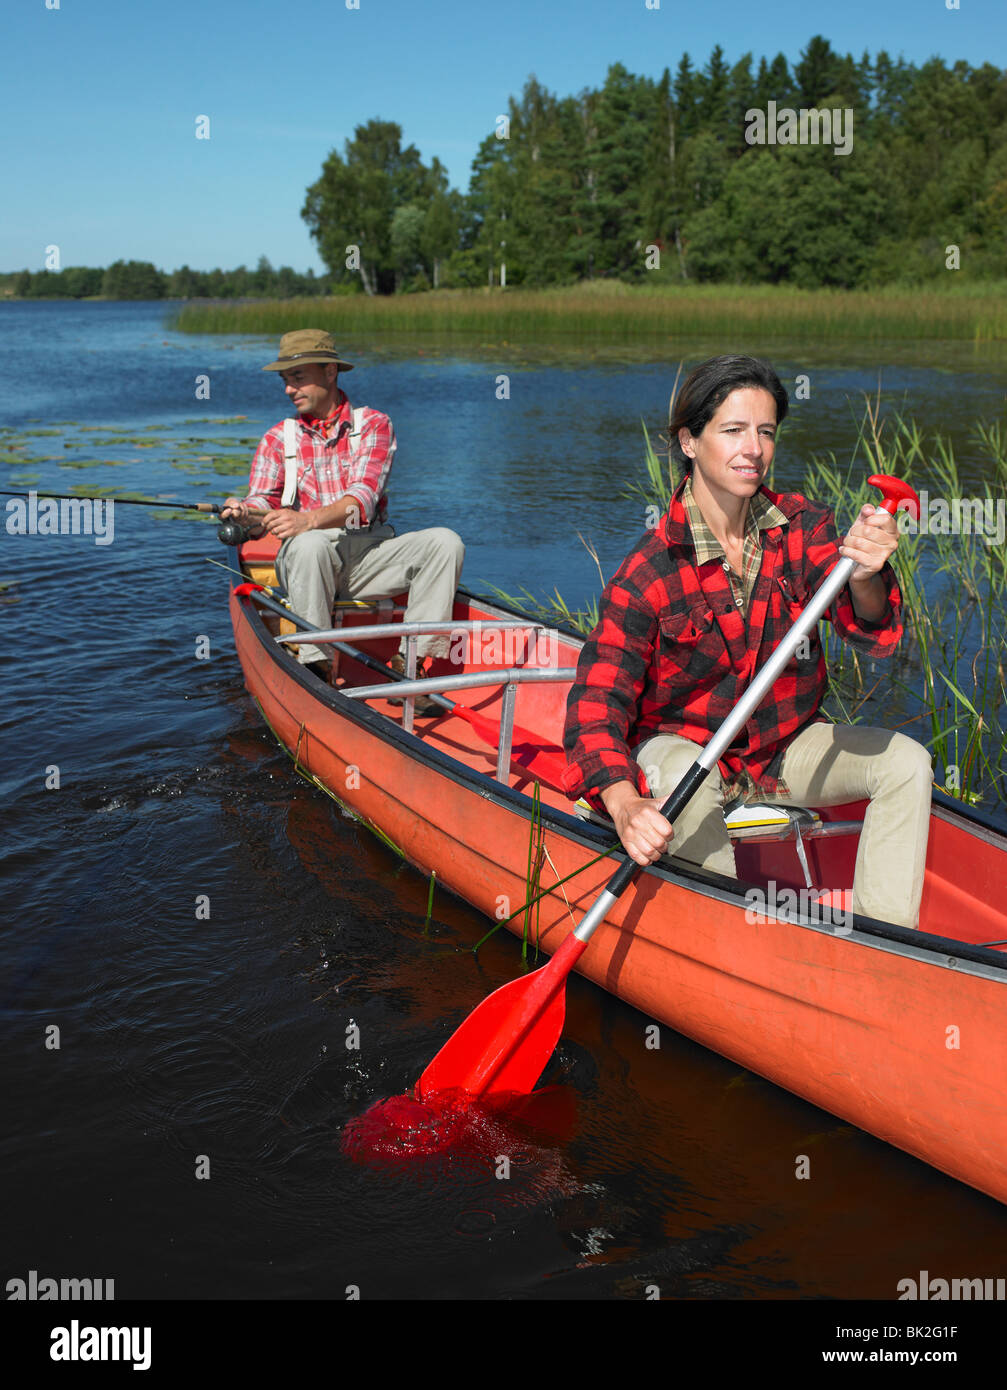 Couple on a canoe Stock Photo